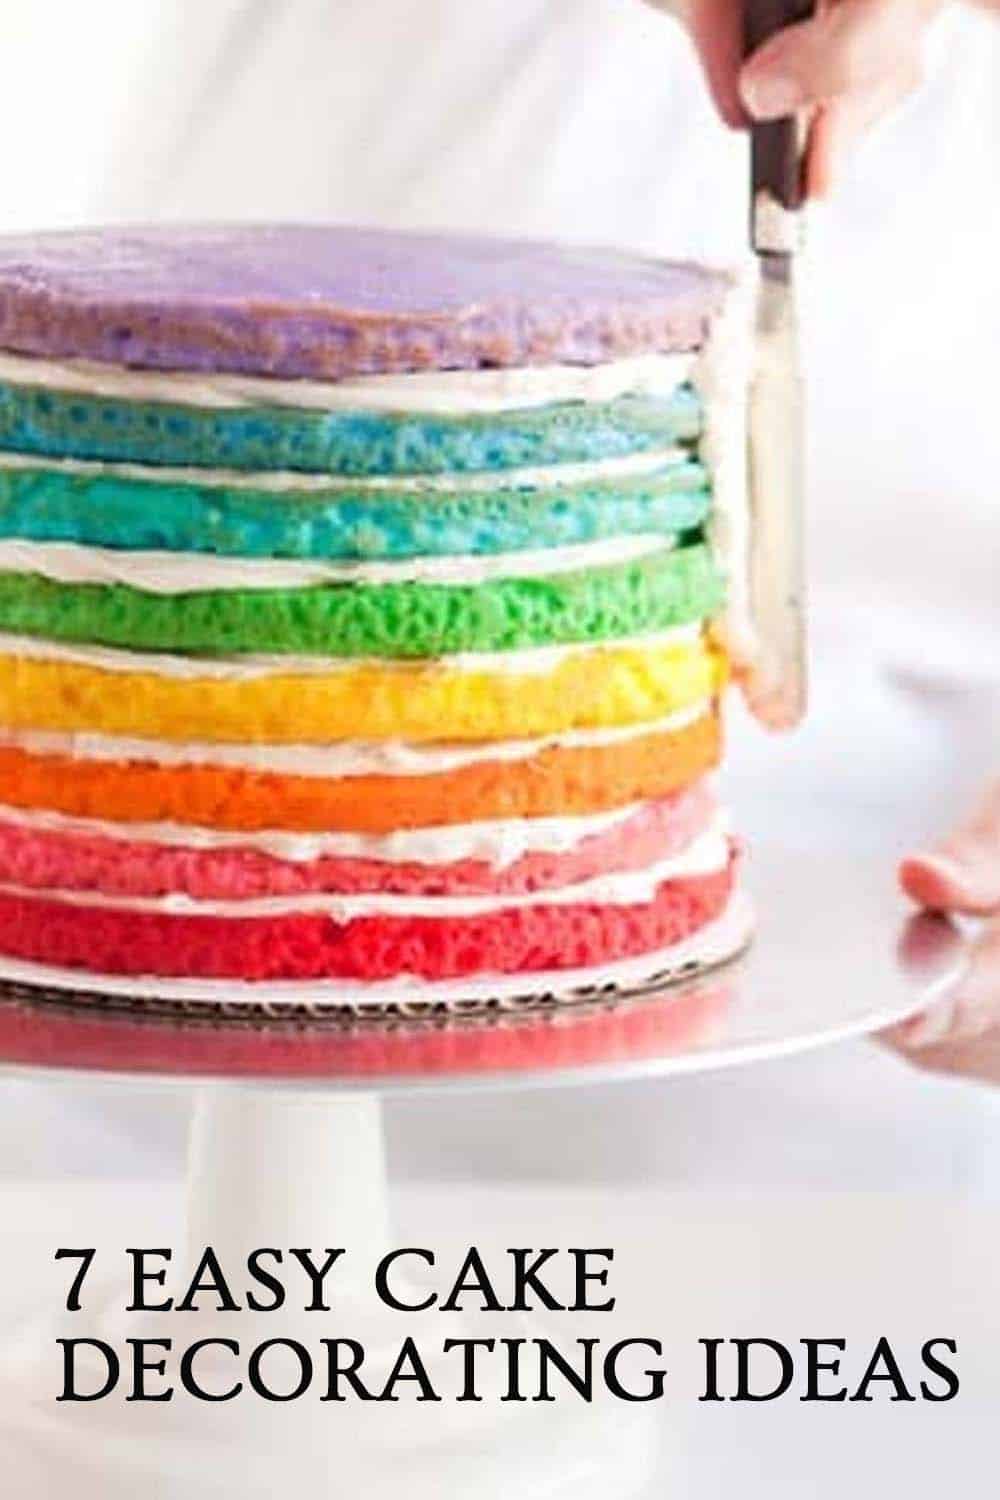 Cake Decorating Ideas | Wilton-thanhphatduhoc.com.vn